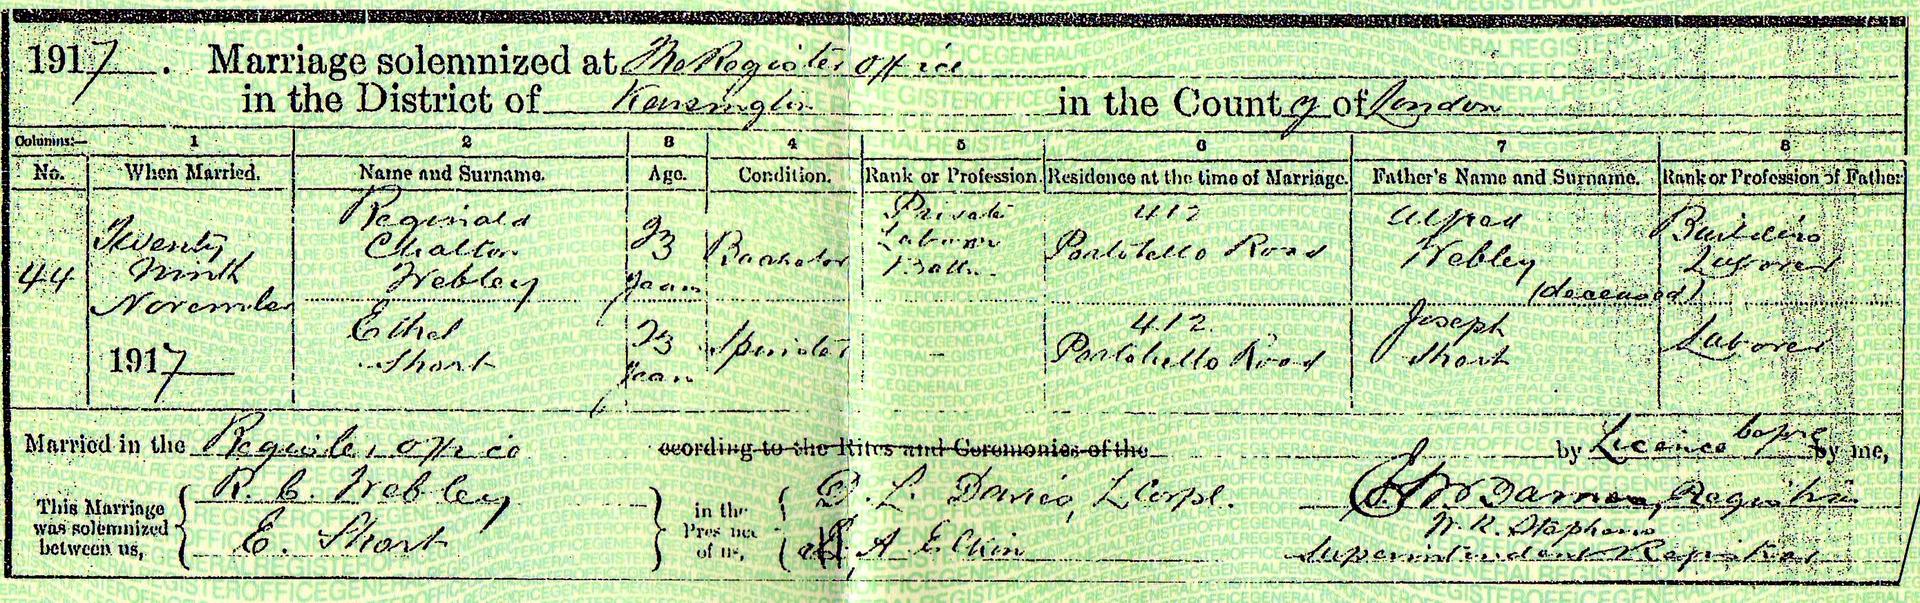 Ethel and Reginald’s marriage certificate